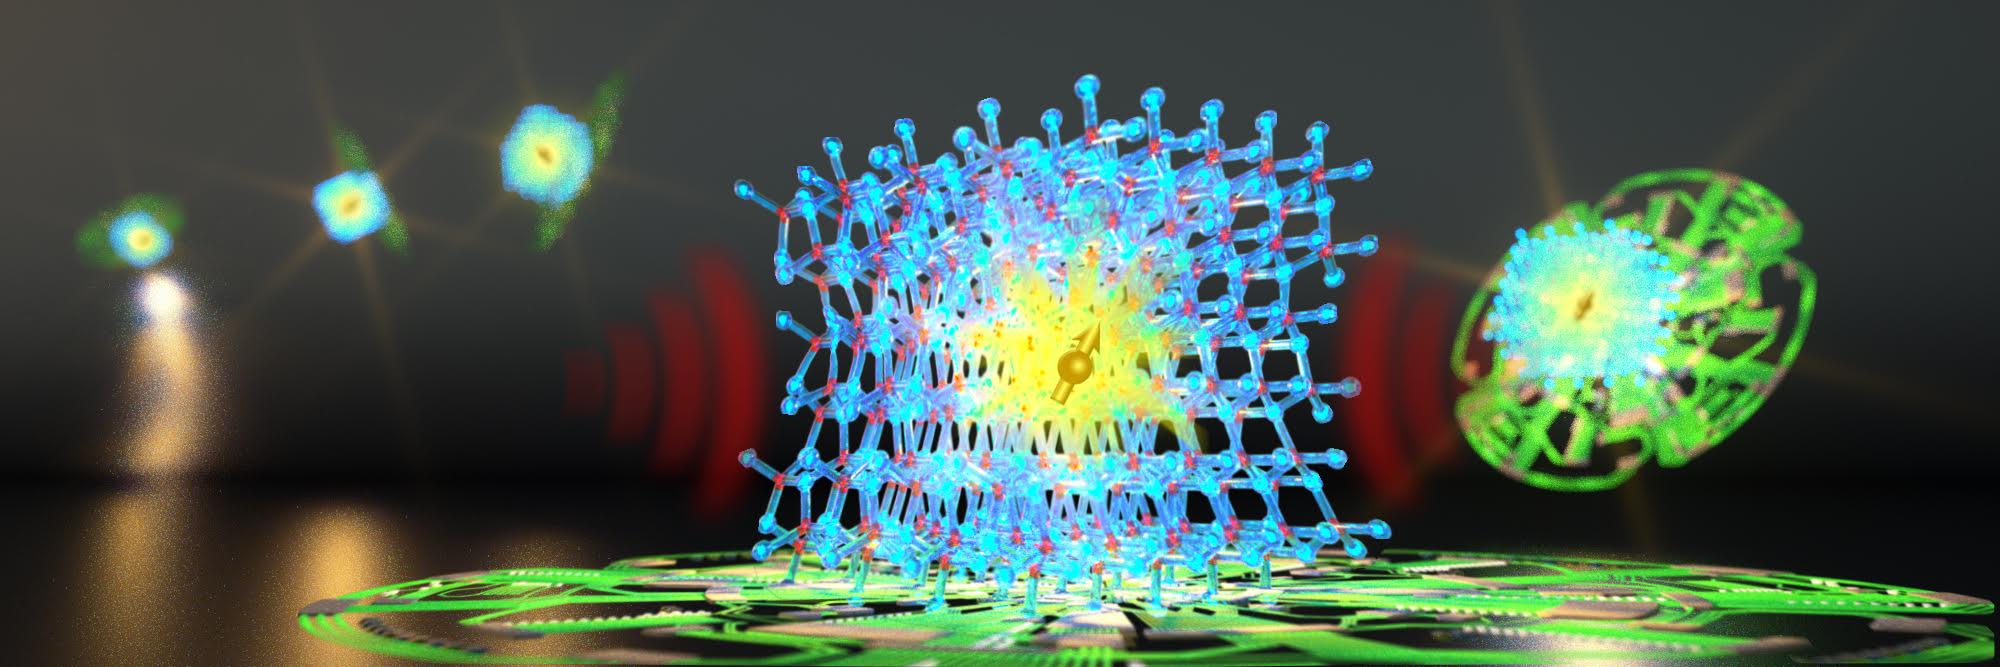 Aluminum nitride may be engineered to advance quantum computing